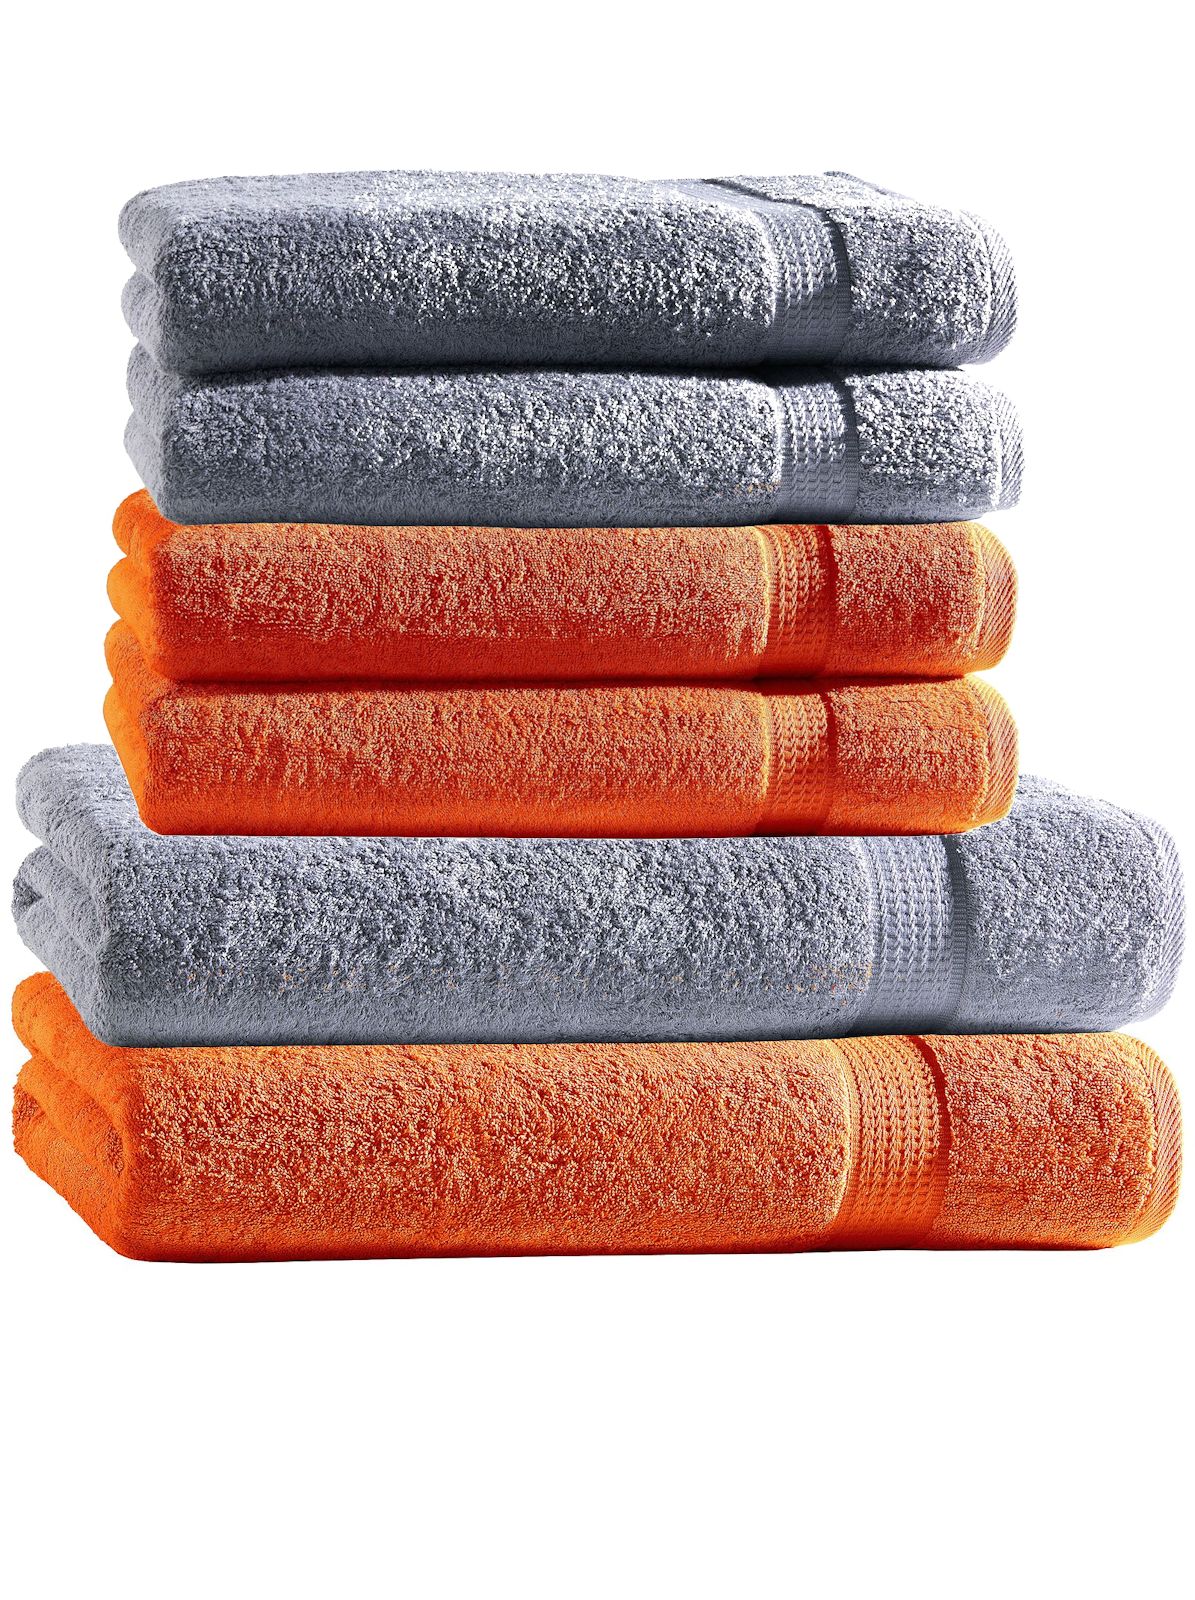 Verkauf zu Schnäppchenpreisen Handtuch Set Mix Farben Baumwolle 6tlg. Duschtuch 2 | 4 Duschtücher Handtücher 2 eBay